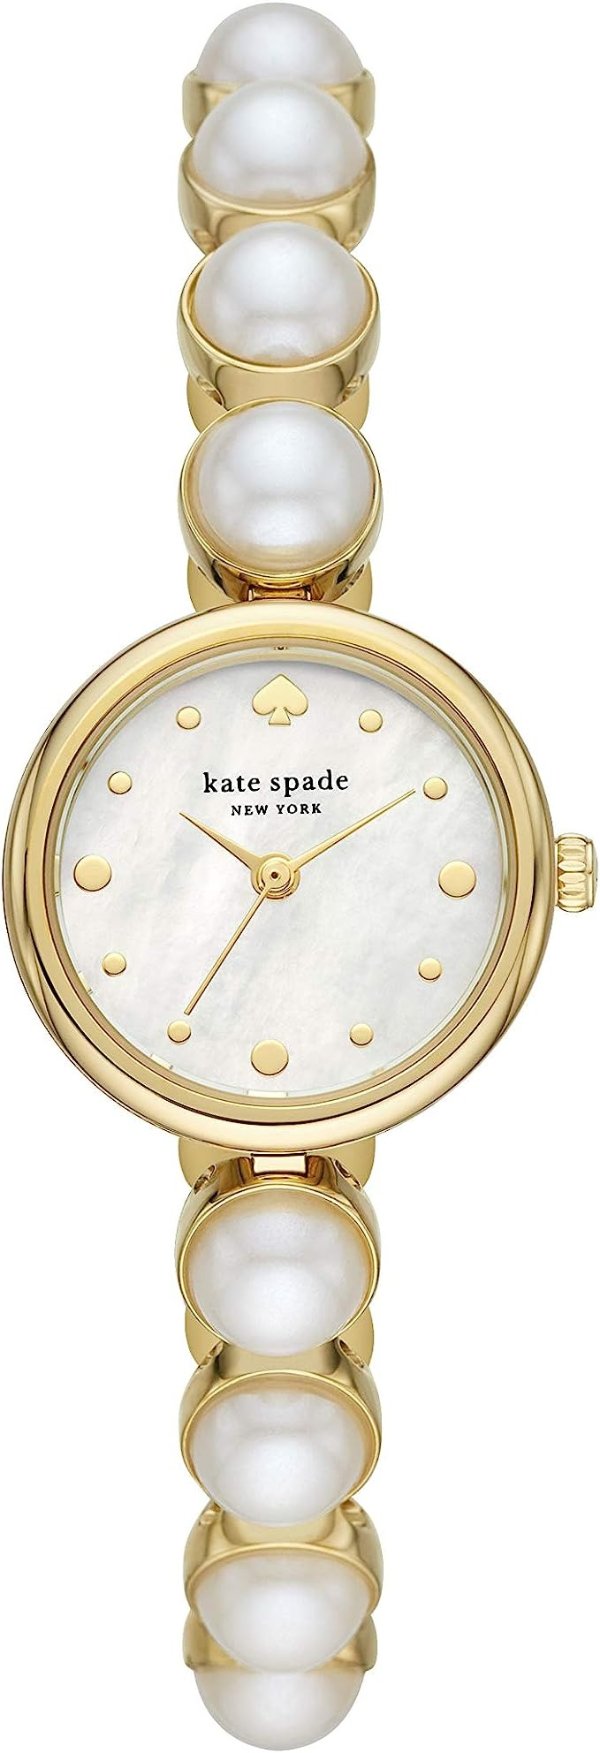 Kate Spade New York Women's Monroe Quartz Stainless Steel Jewelry Dress Watch